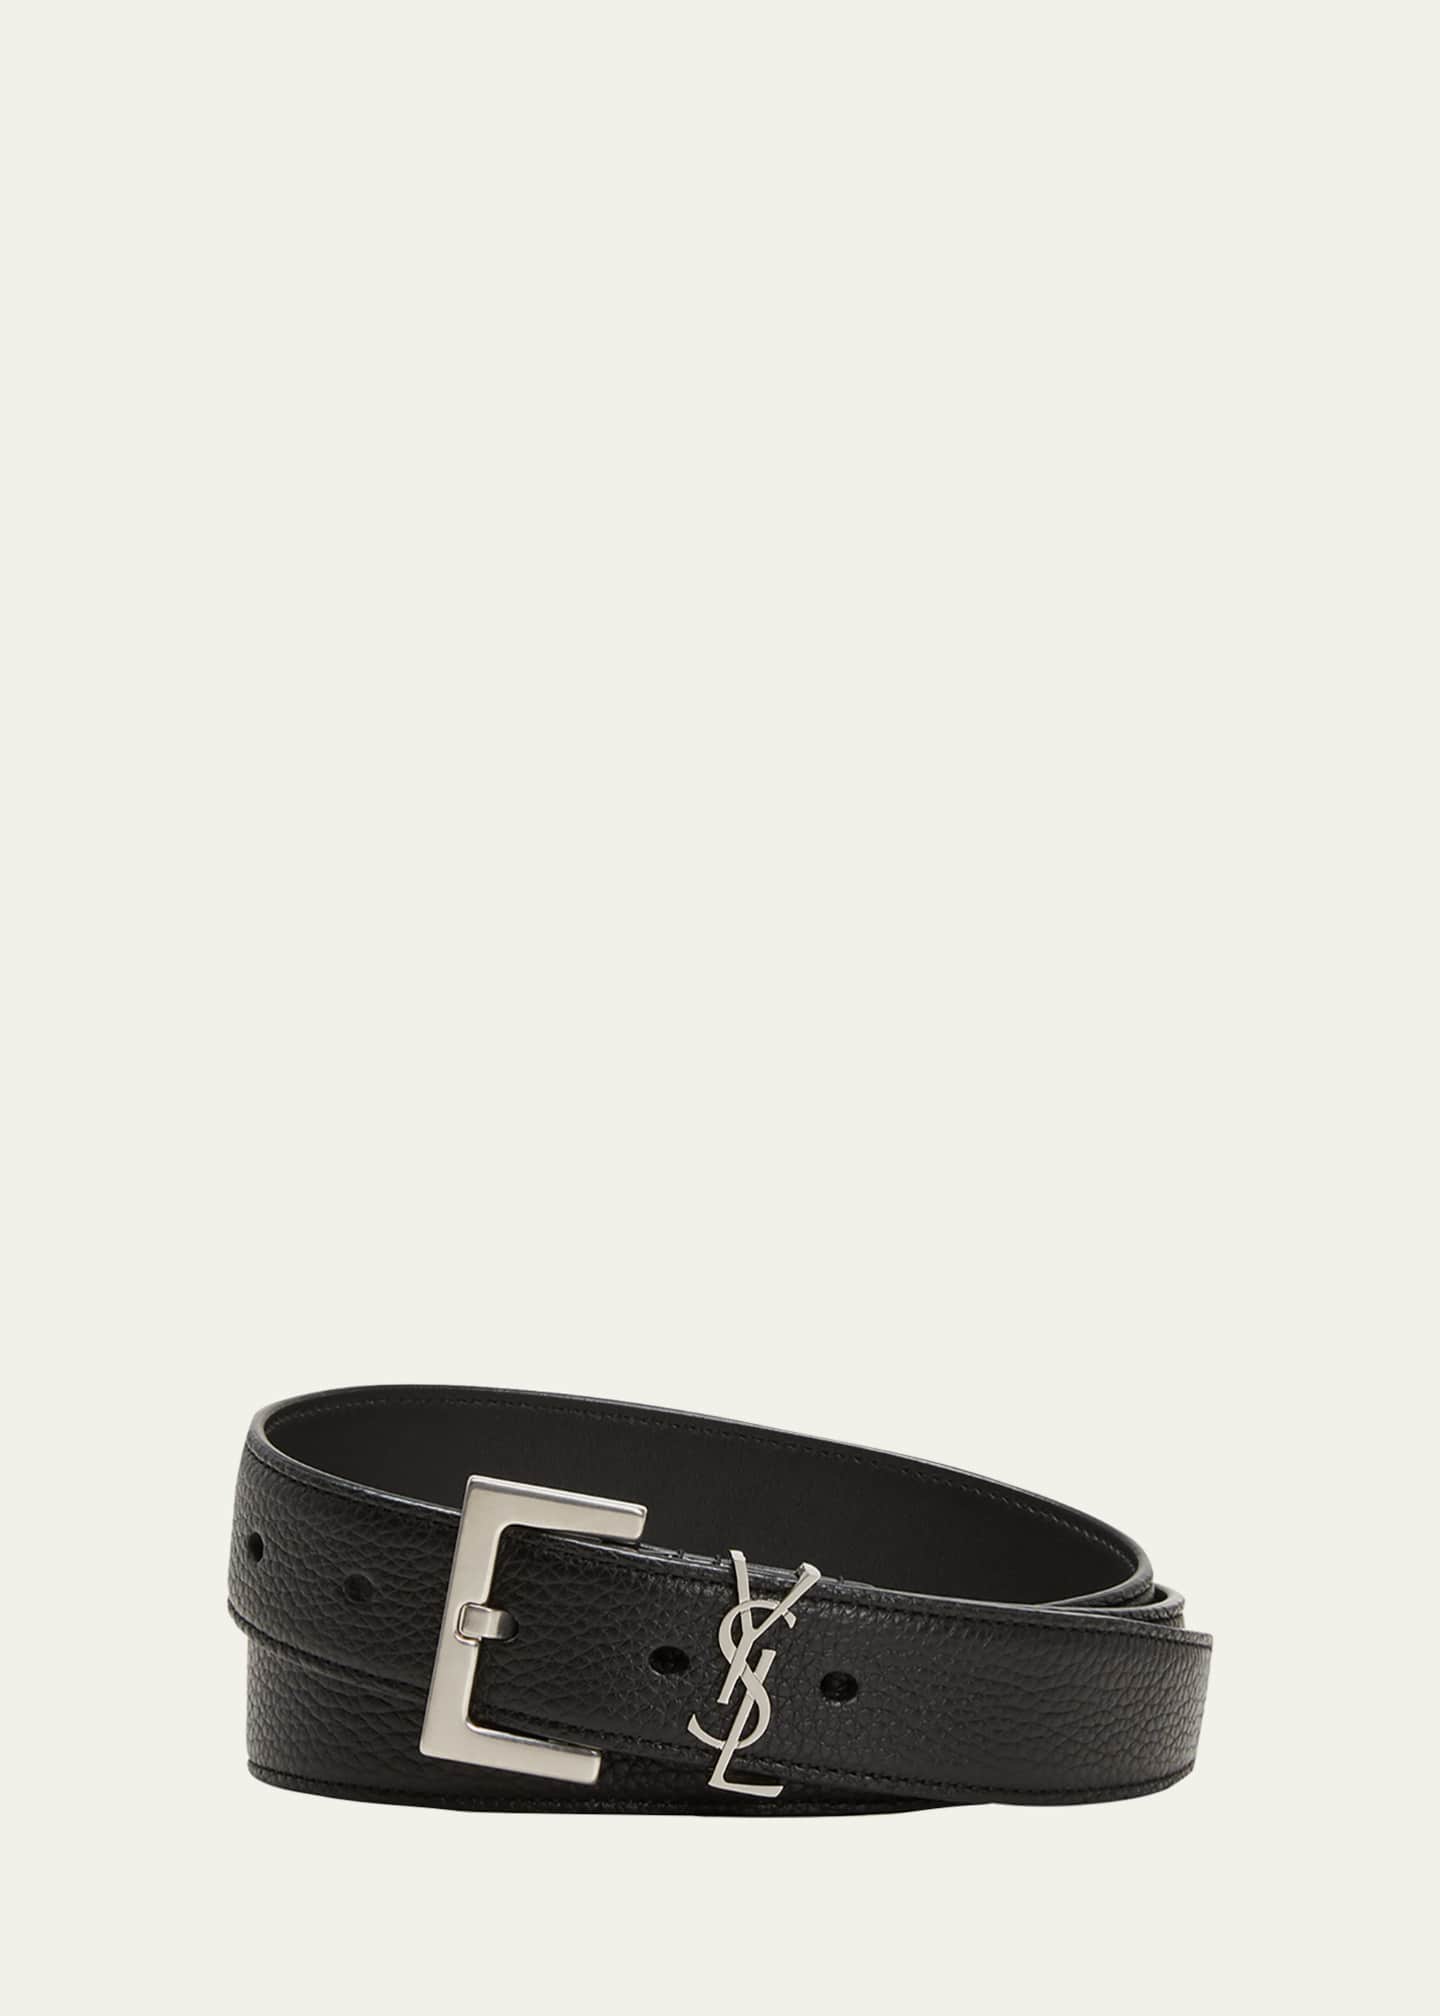 Designer Brand Fashion Belt Top Luxury Ysl's Unisex Belts Leather